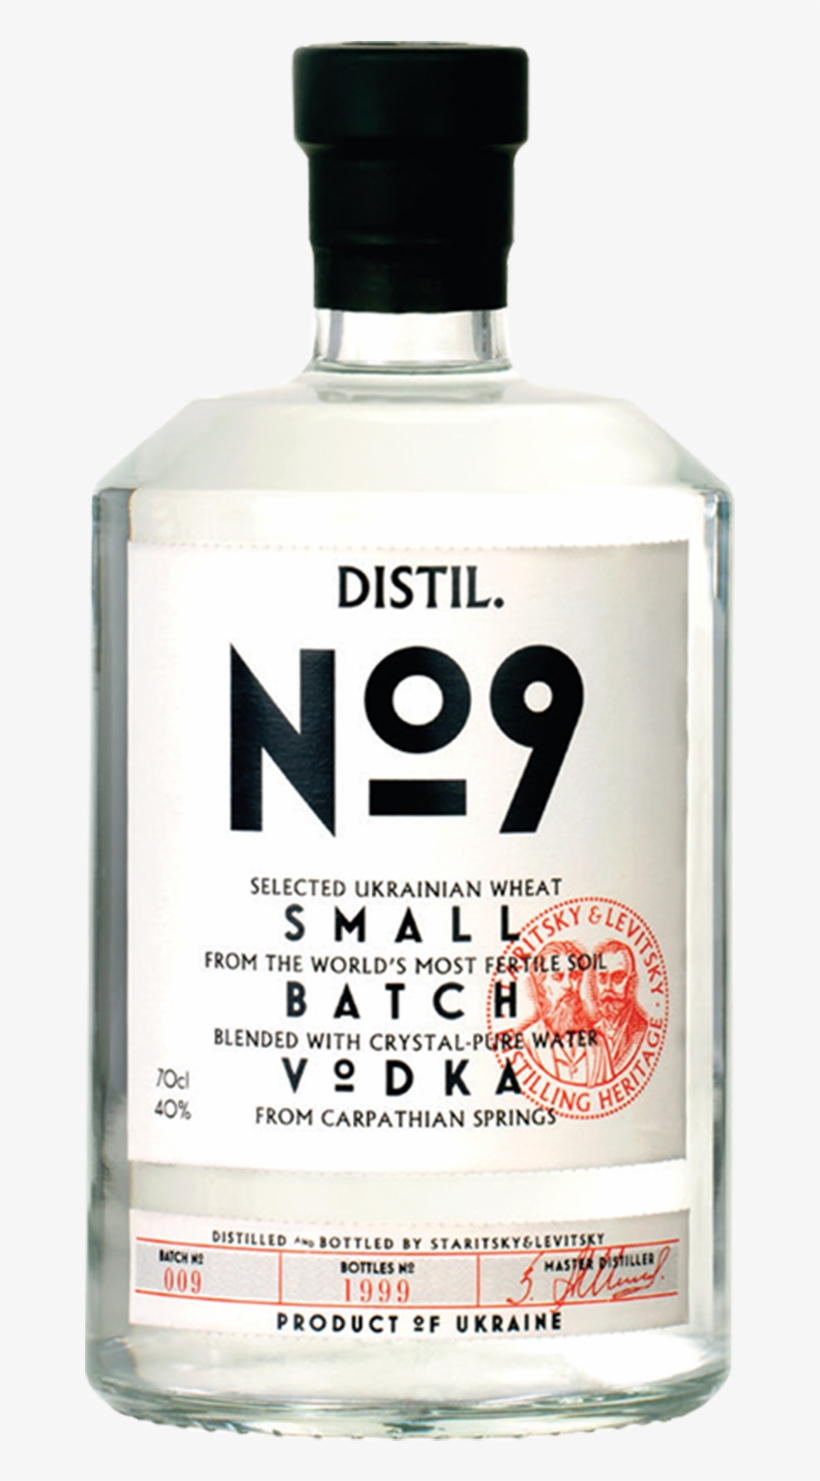 Distil No 9 Vodka - Staritsky Levitsky Distil No.9 Small Batch Vodka, transparent png #968909